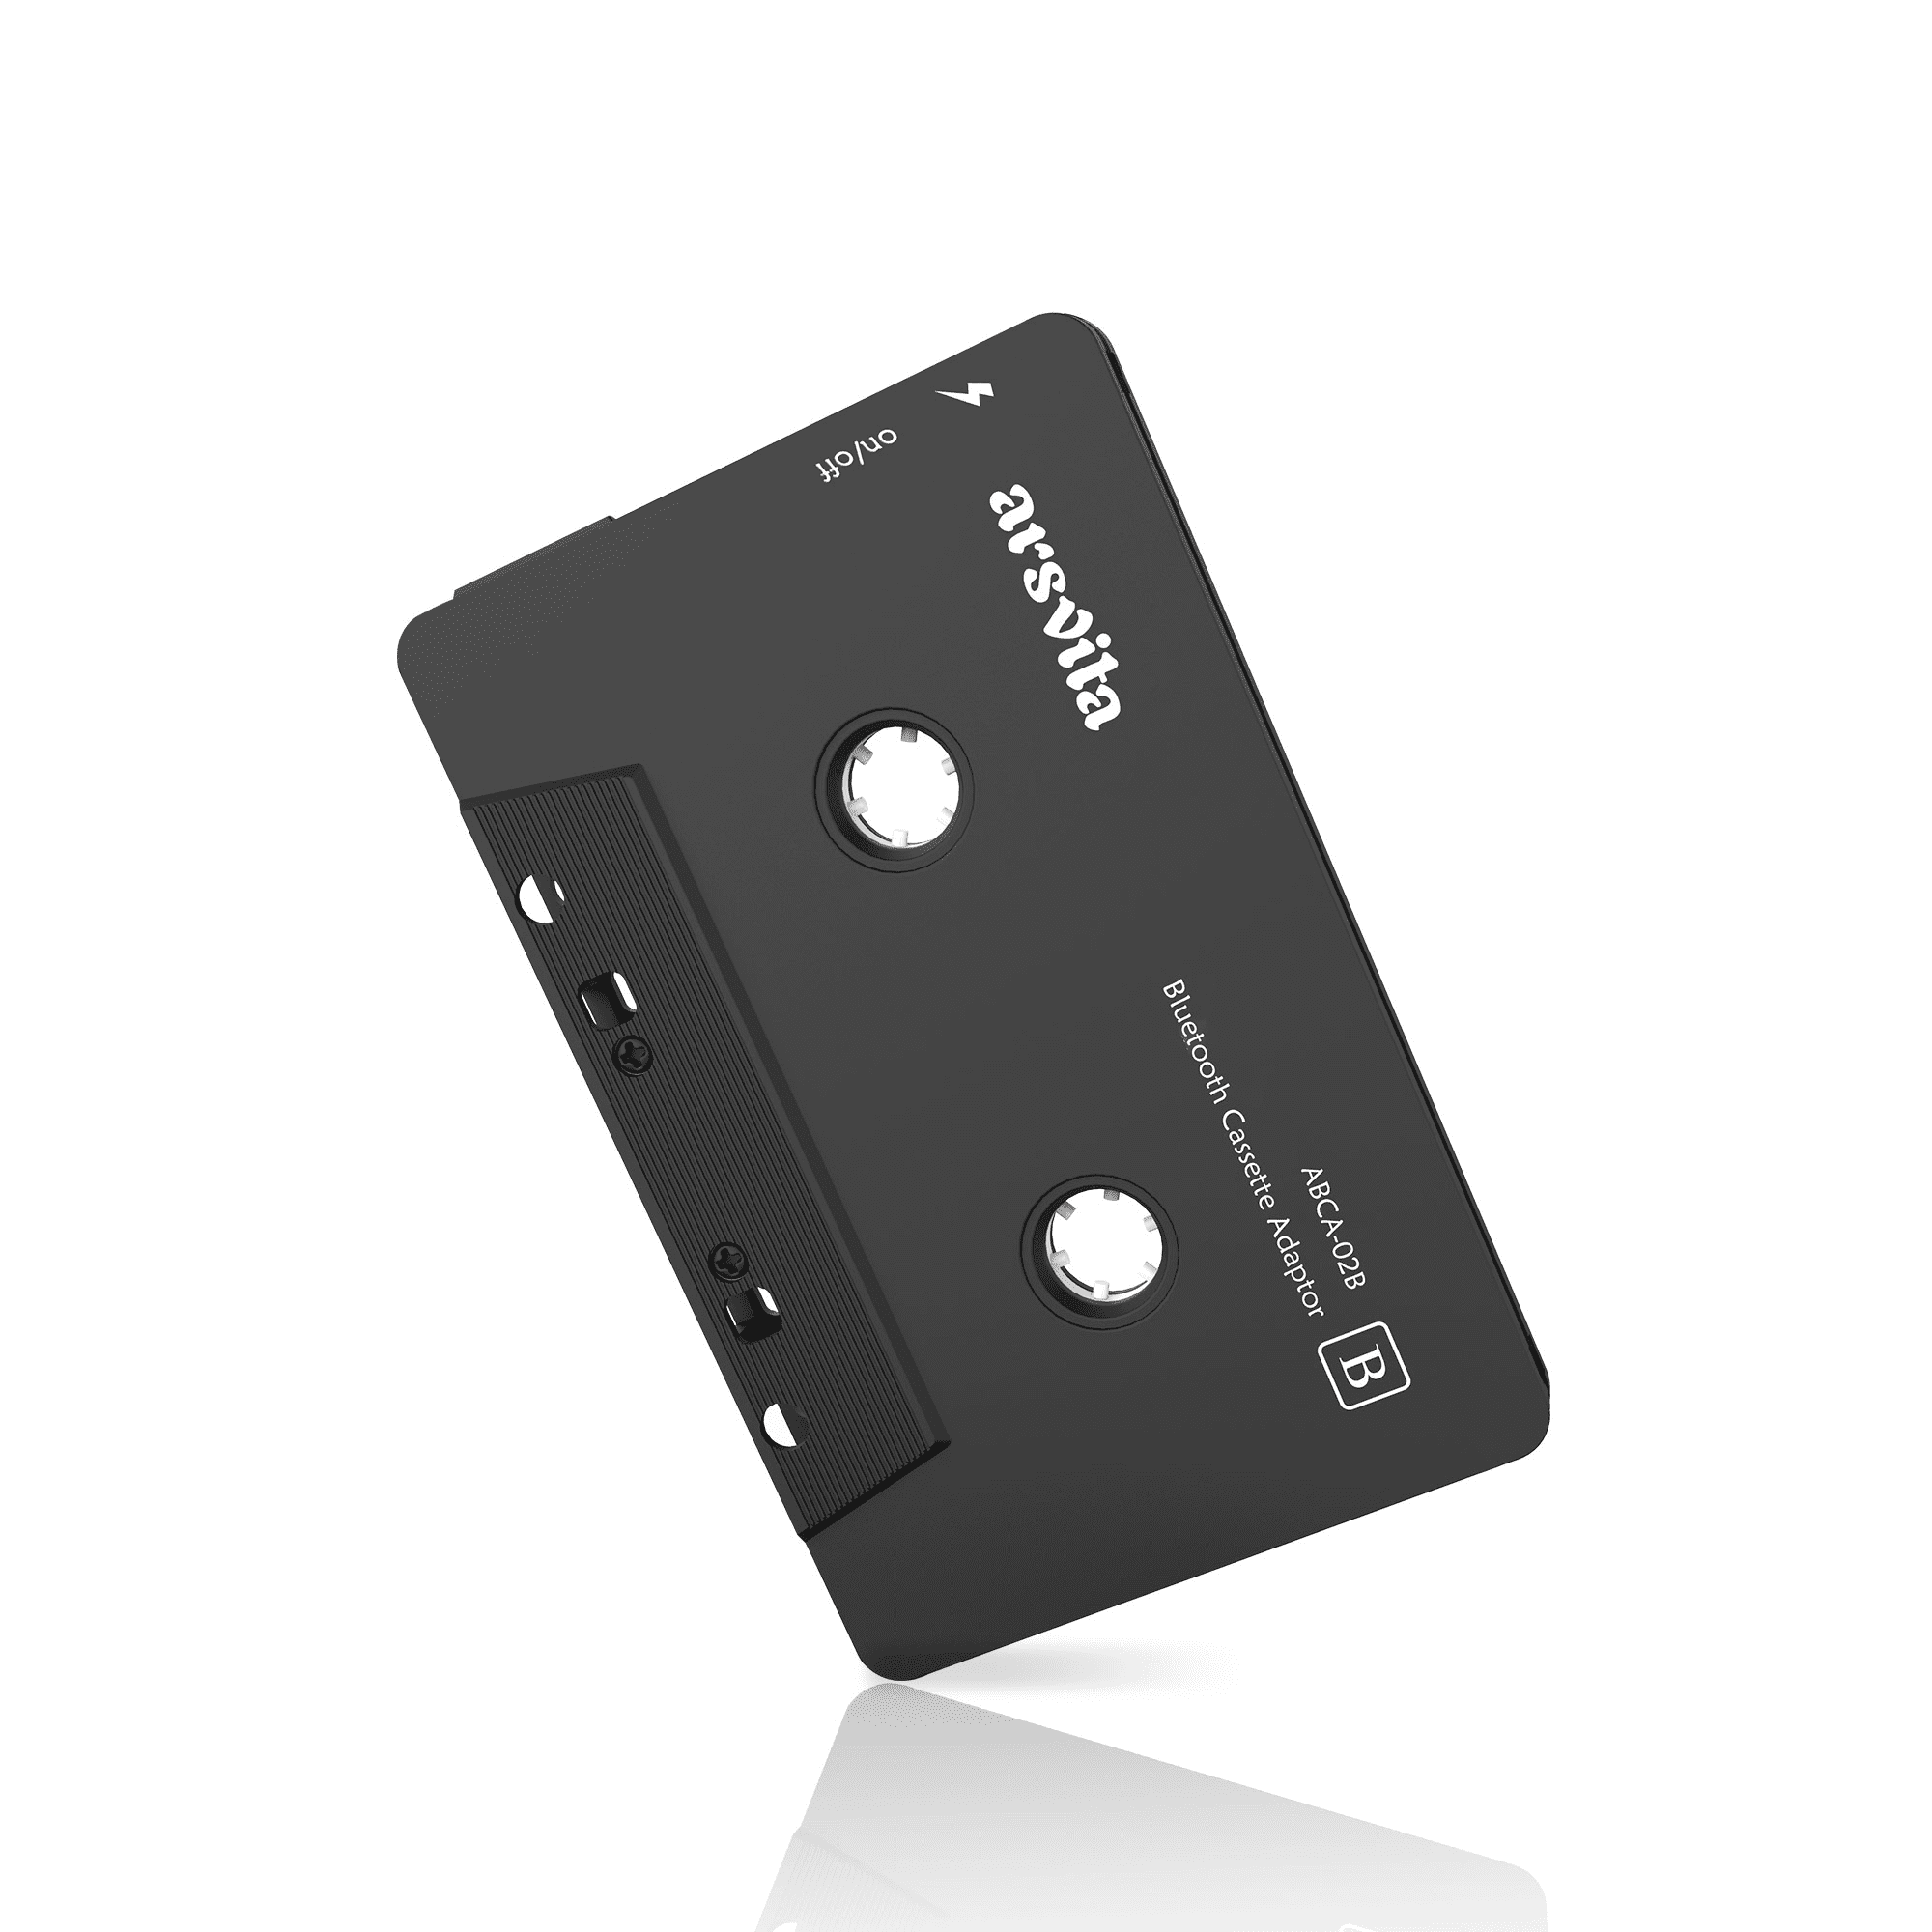 Still In Original Box Car Audio Stereo Cassette Tape Adapter - Blue